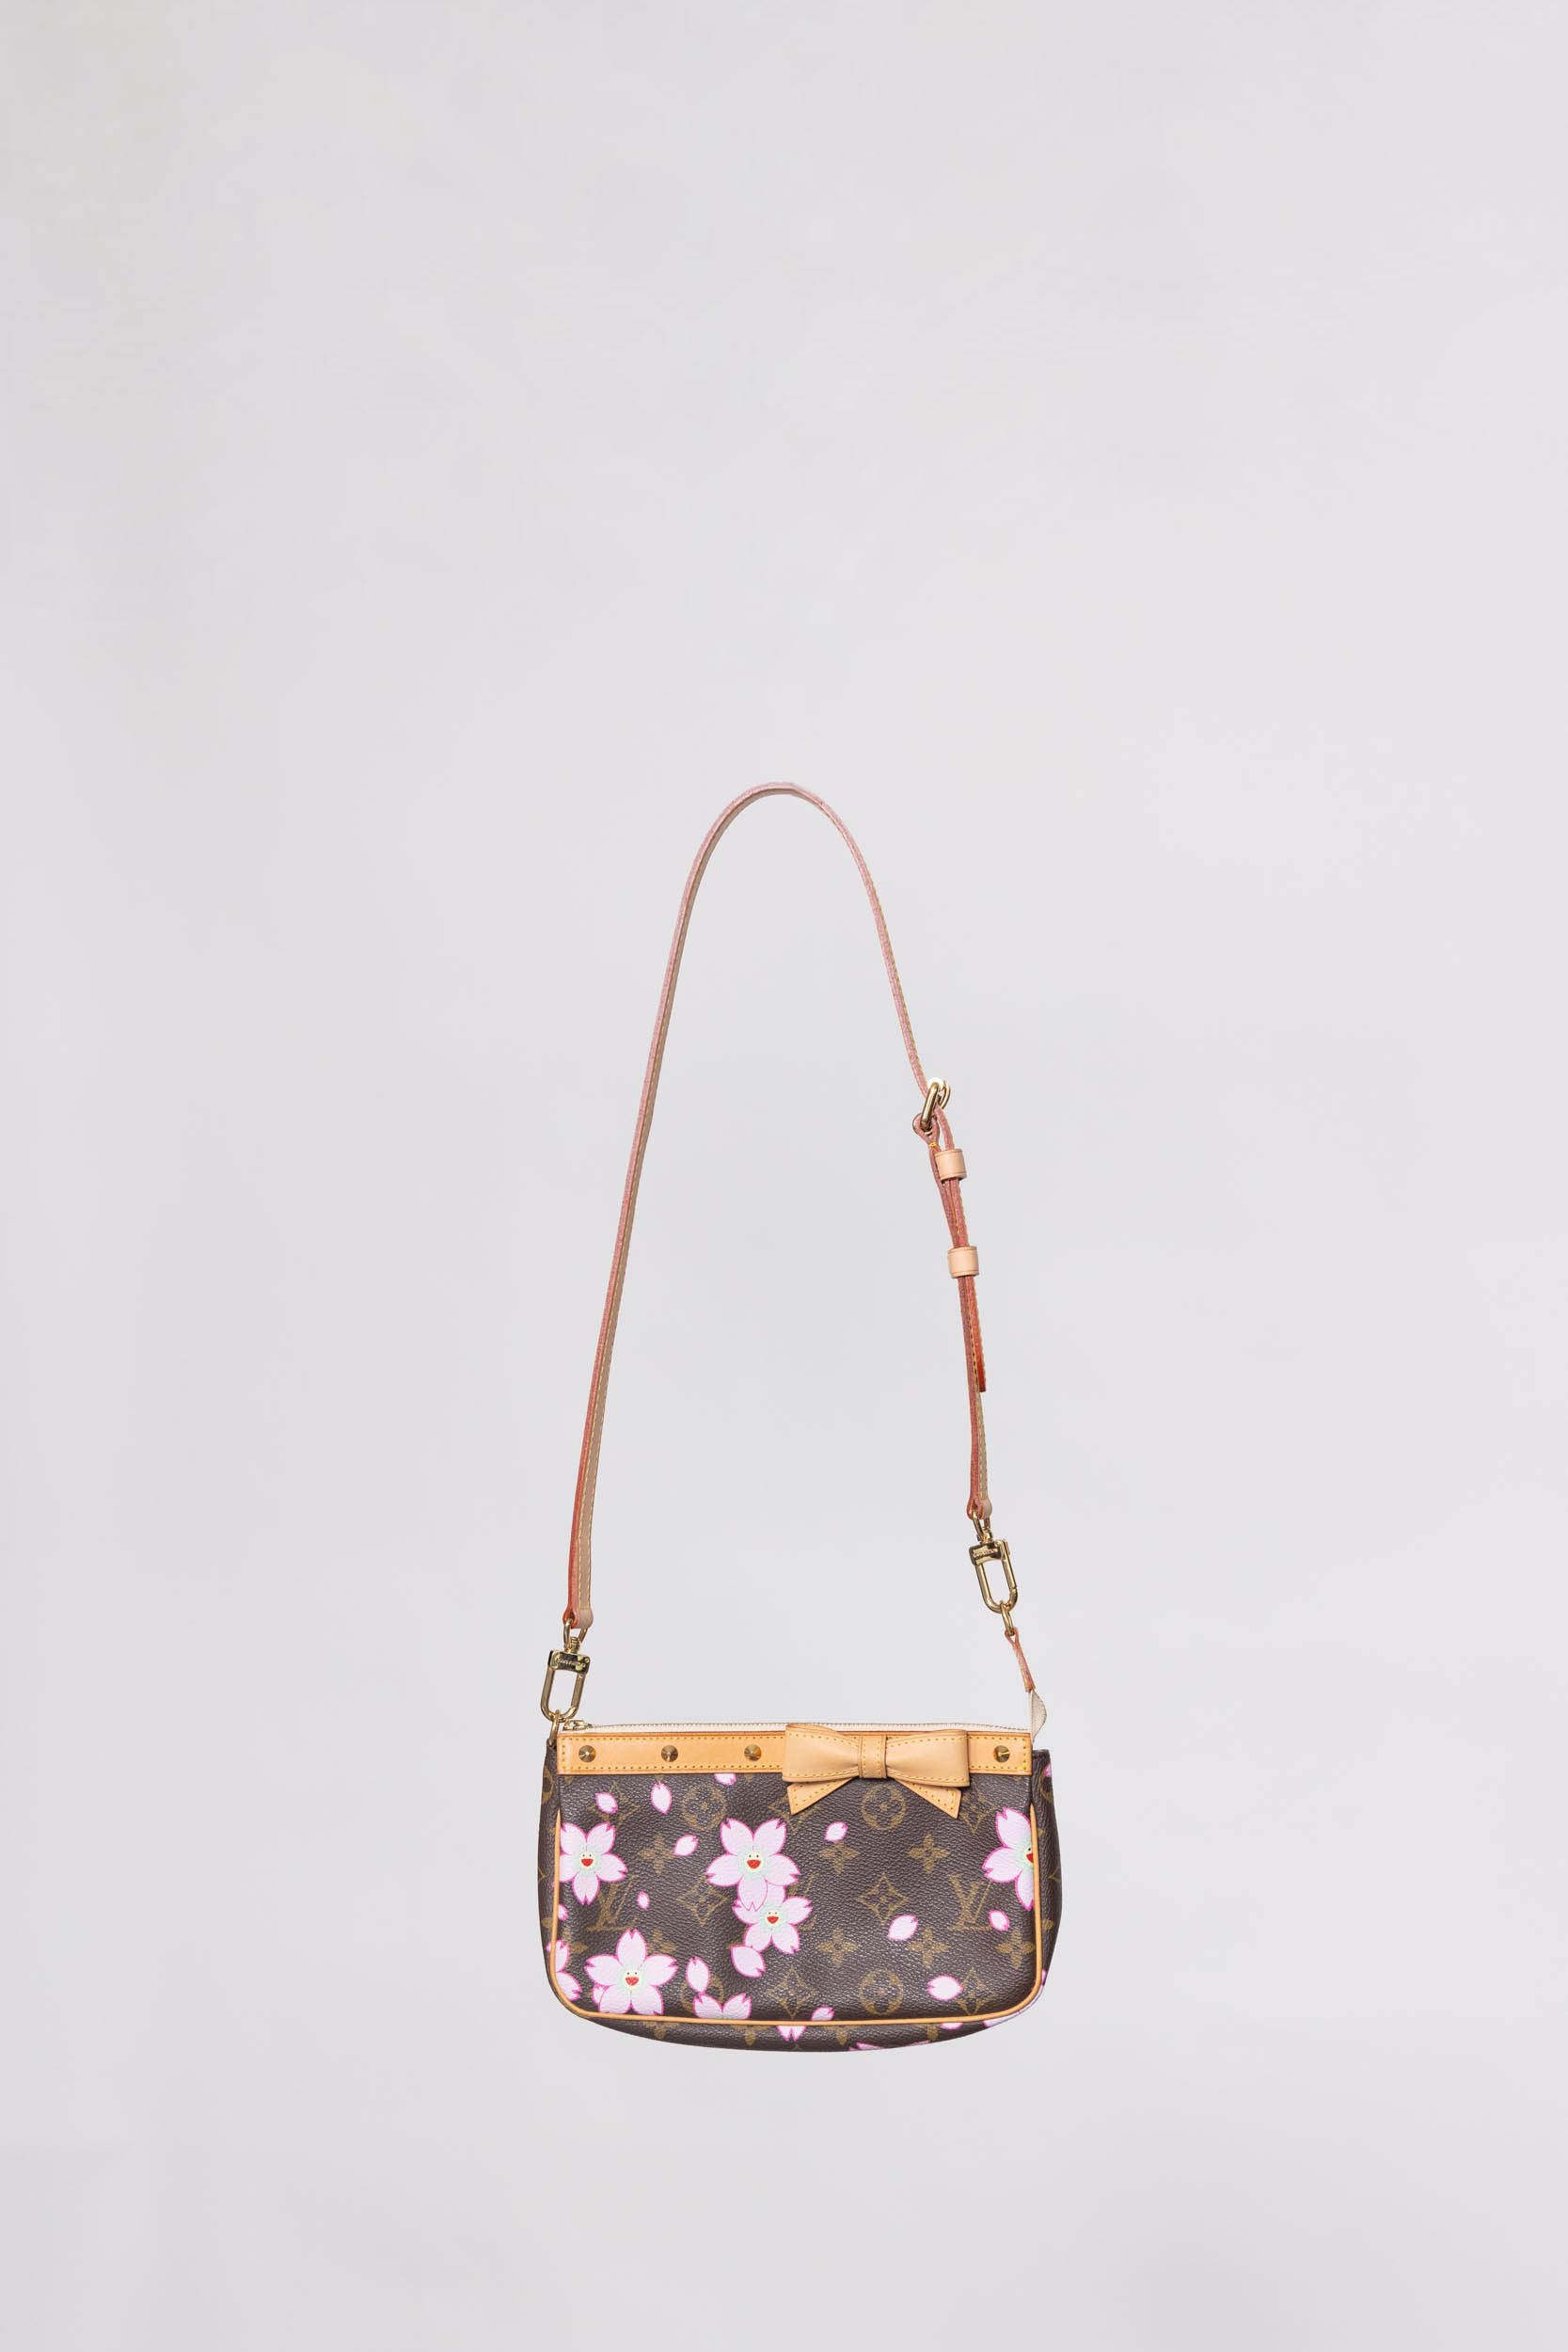 Louis Vuitton Limited Edition Monogram Murakami Cherry Blossom Pochette Bag